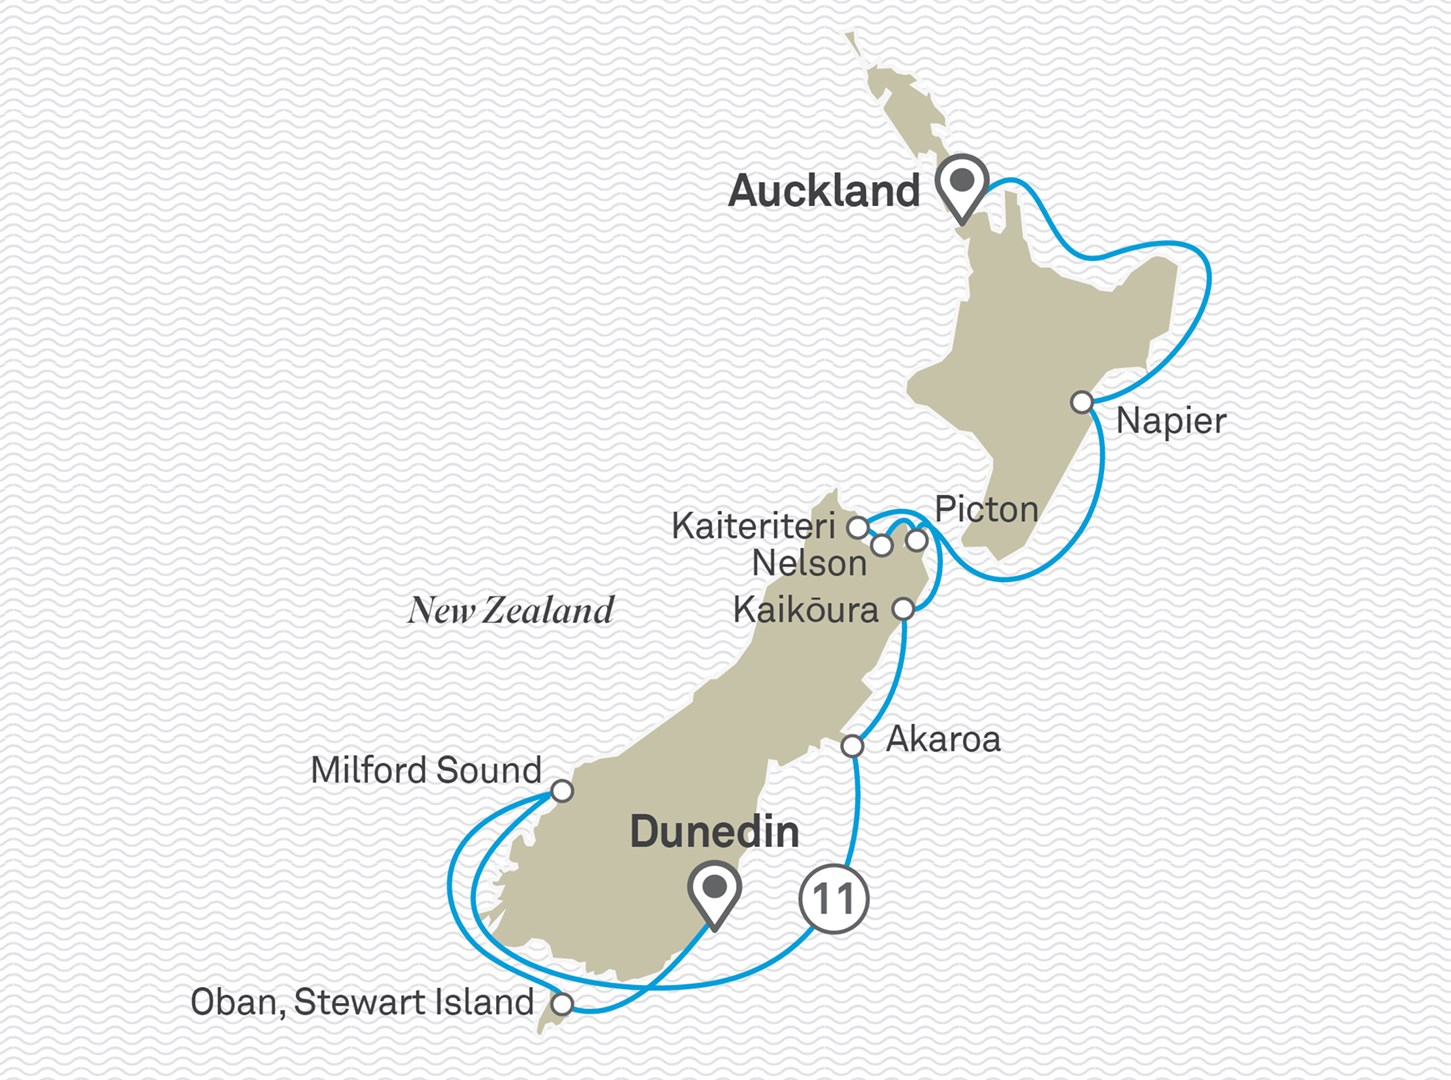 Dunedin - Auckland